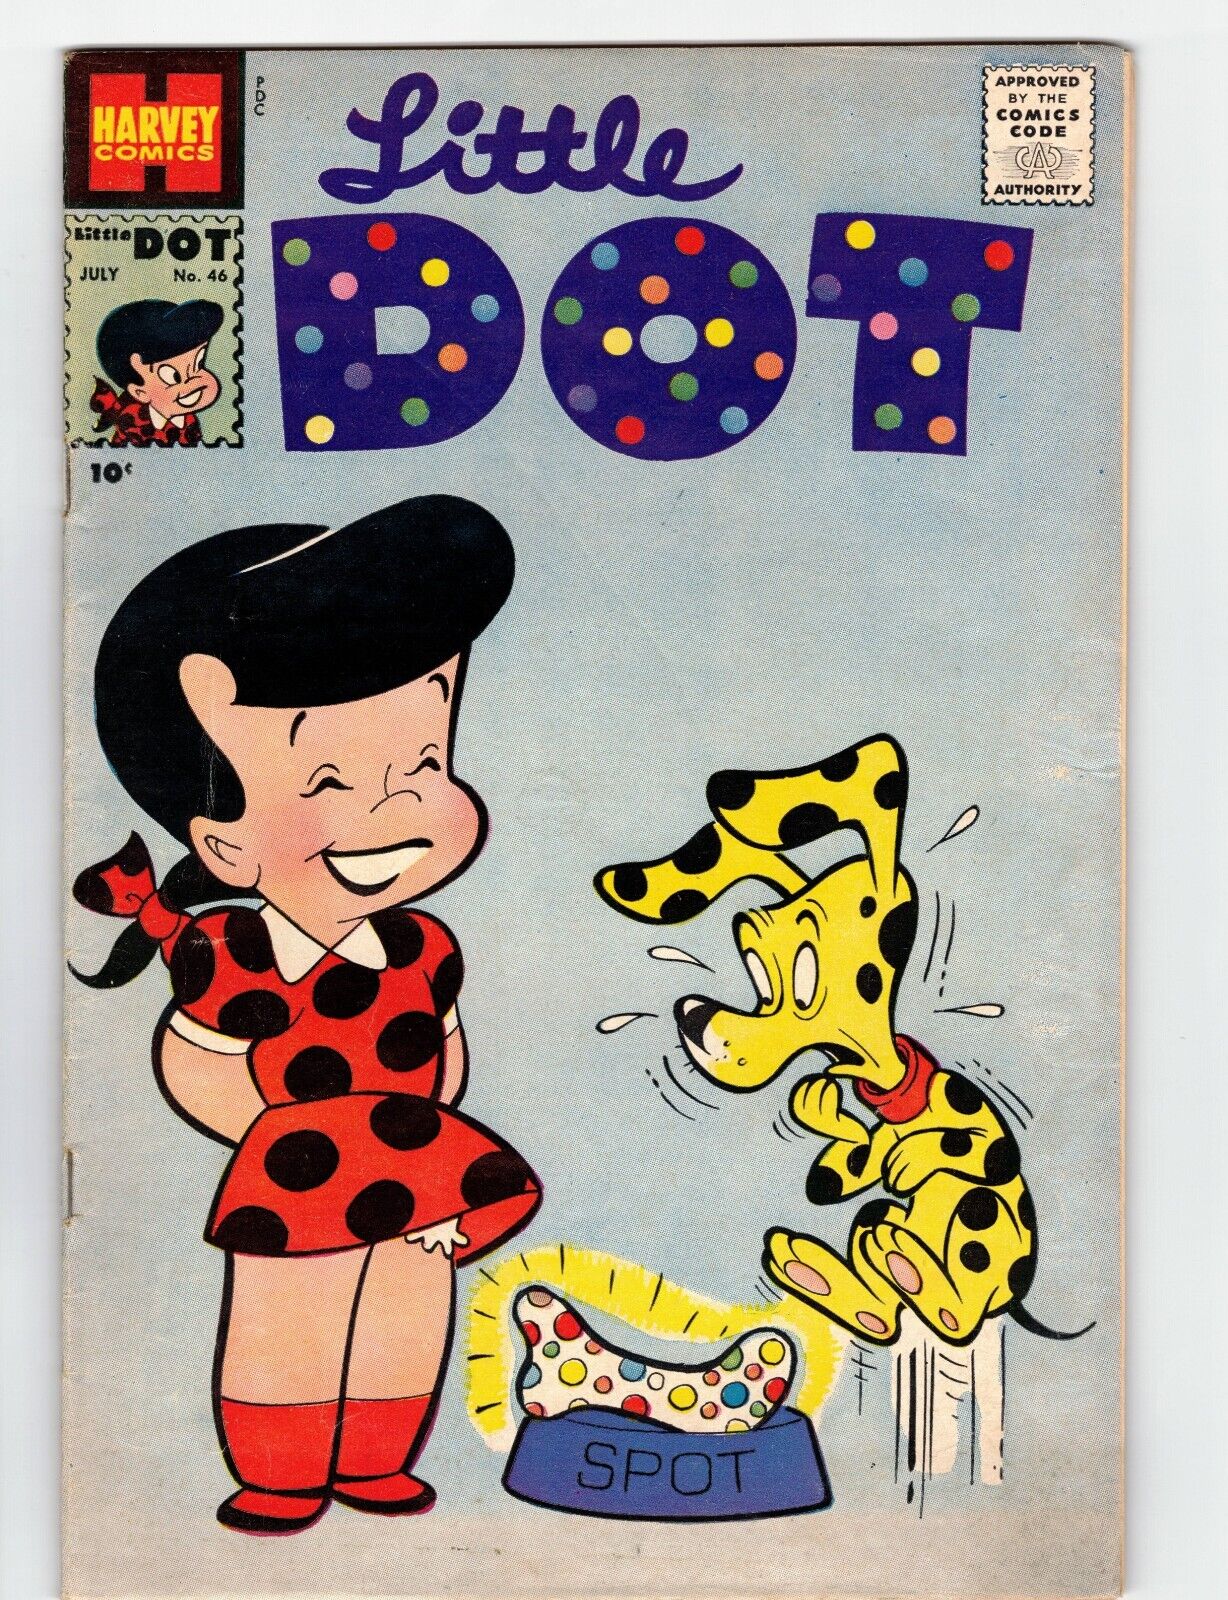 Little Dot #46 - July 1959 - Harvey Comics